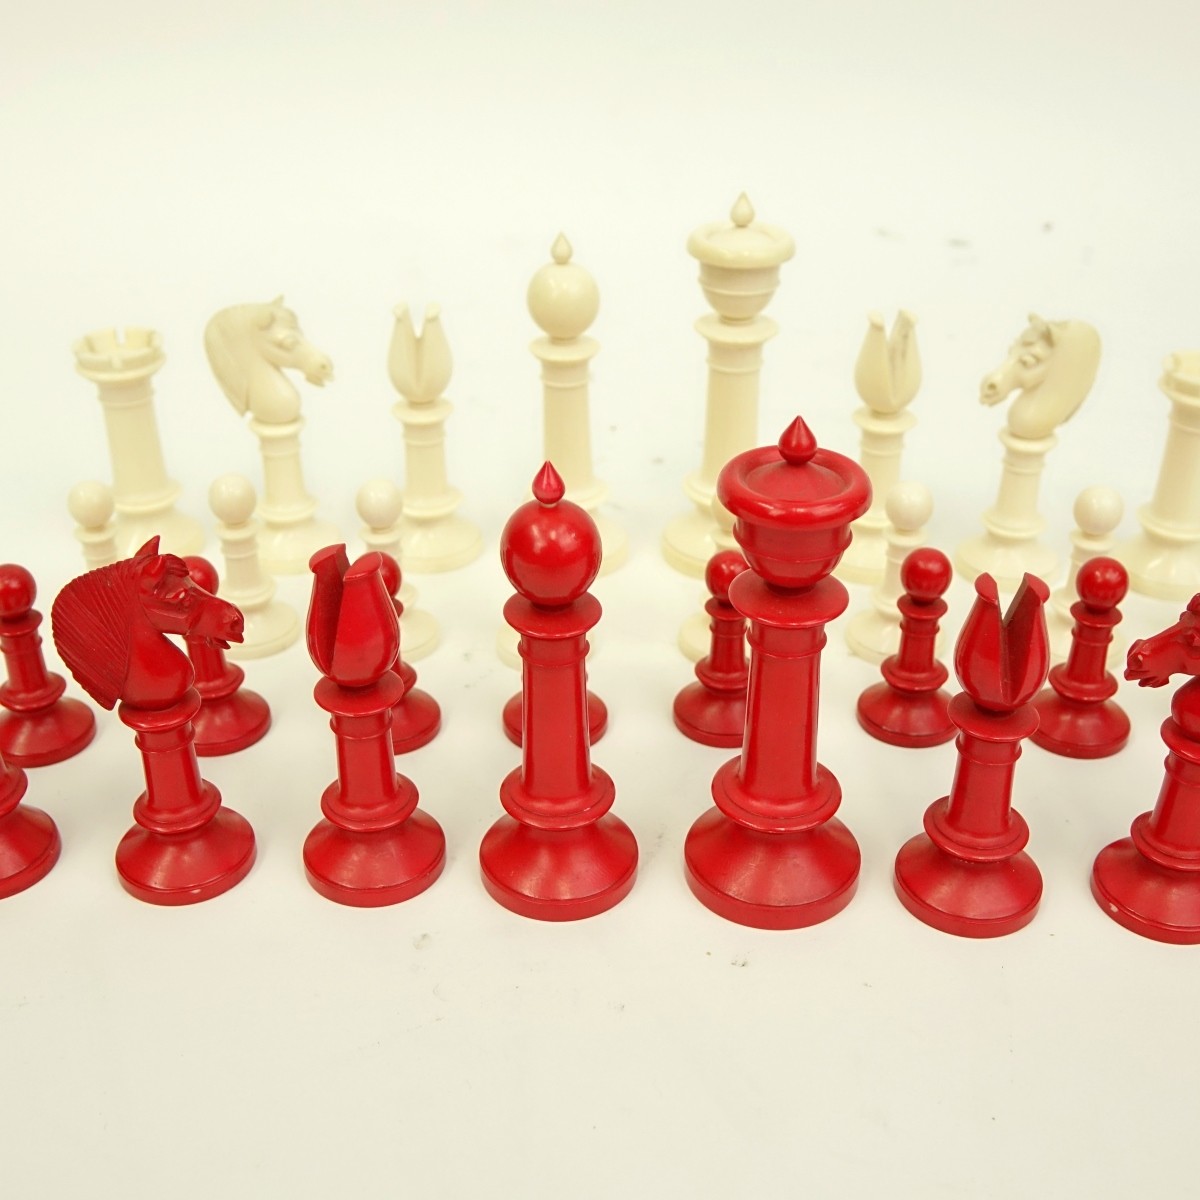 19th Century Staunton 32 Piece Chess Set